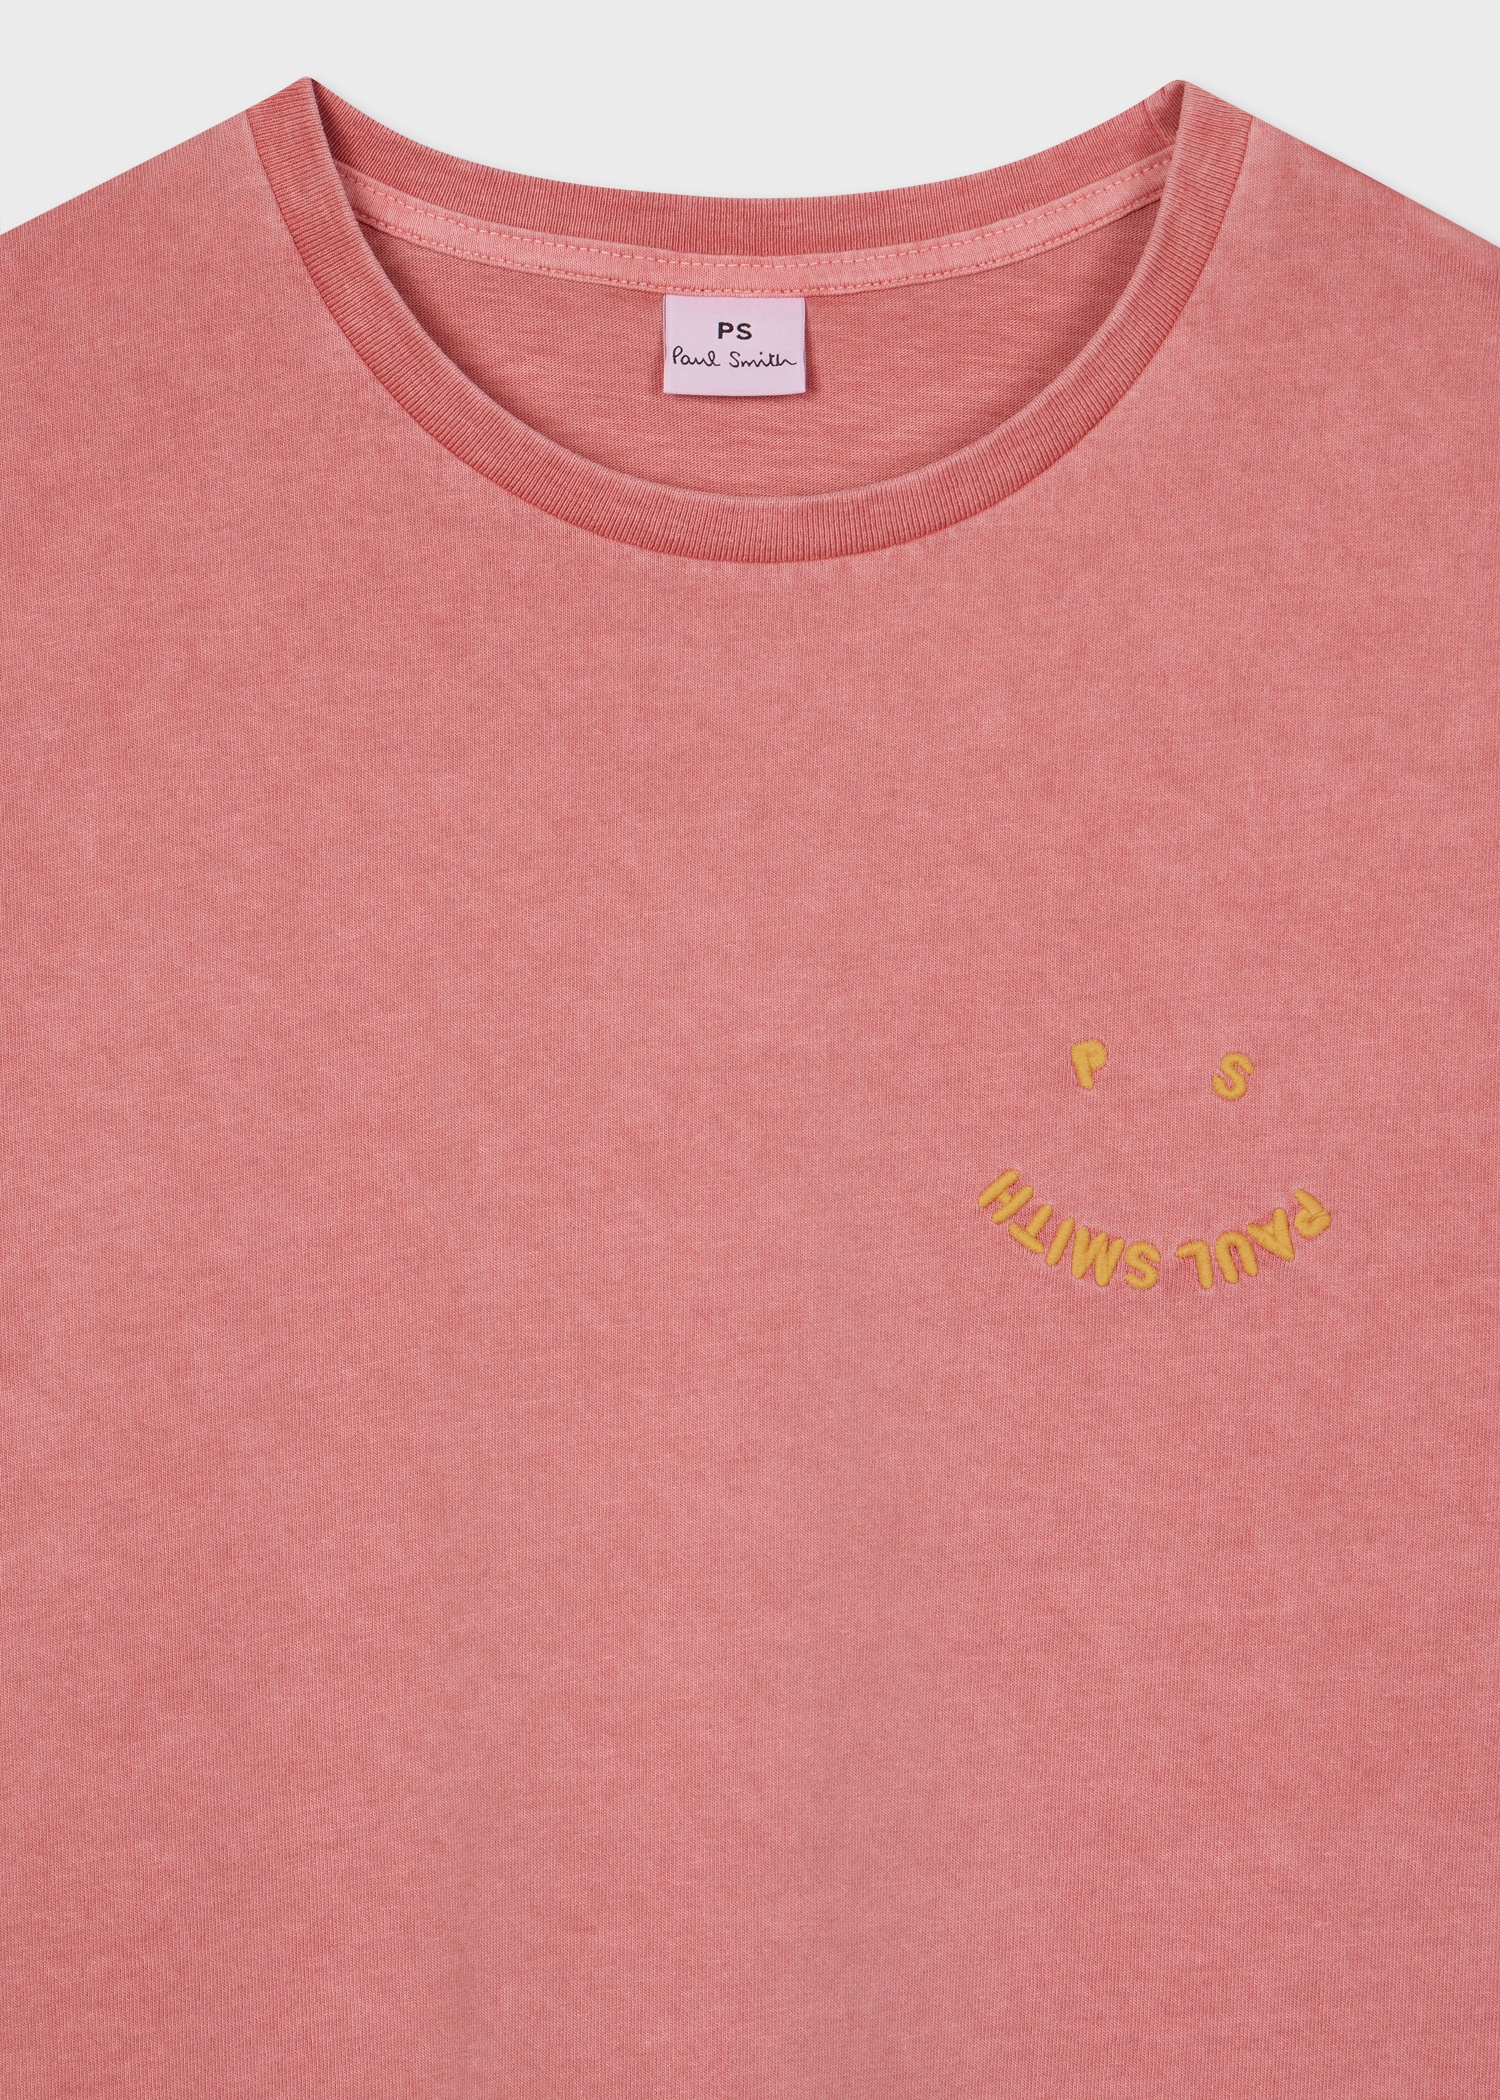 Women's Raspberry Acid Wash PS 'Happy' T-Shirt - 2